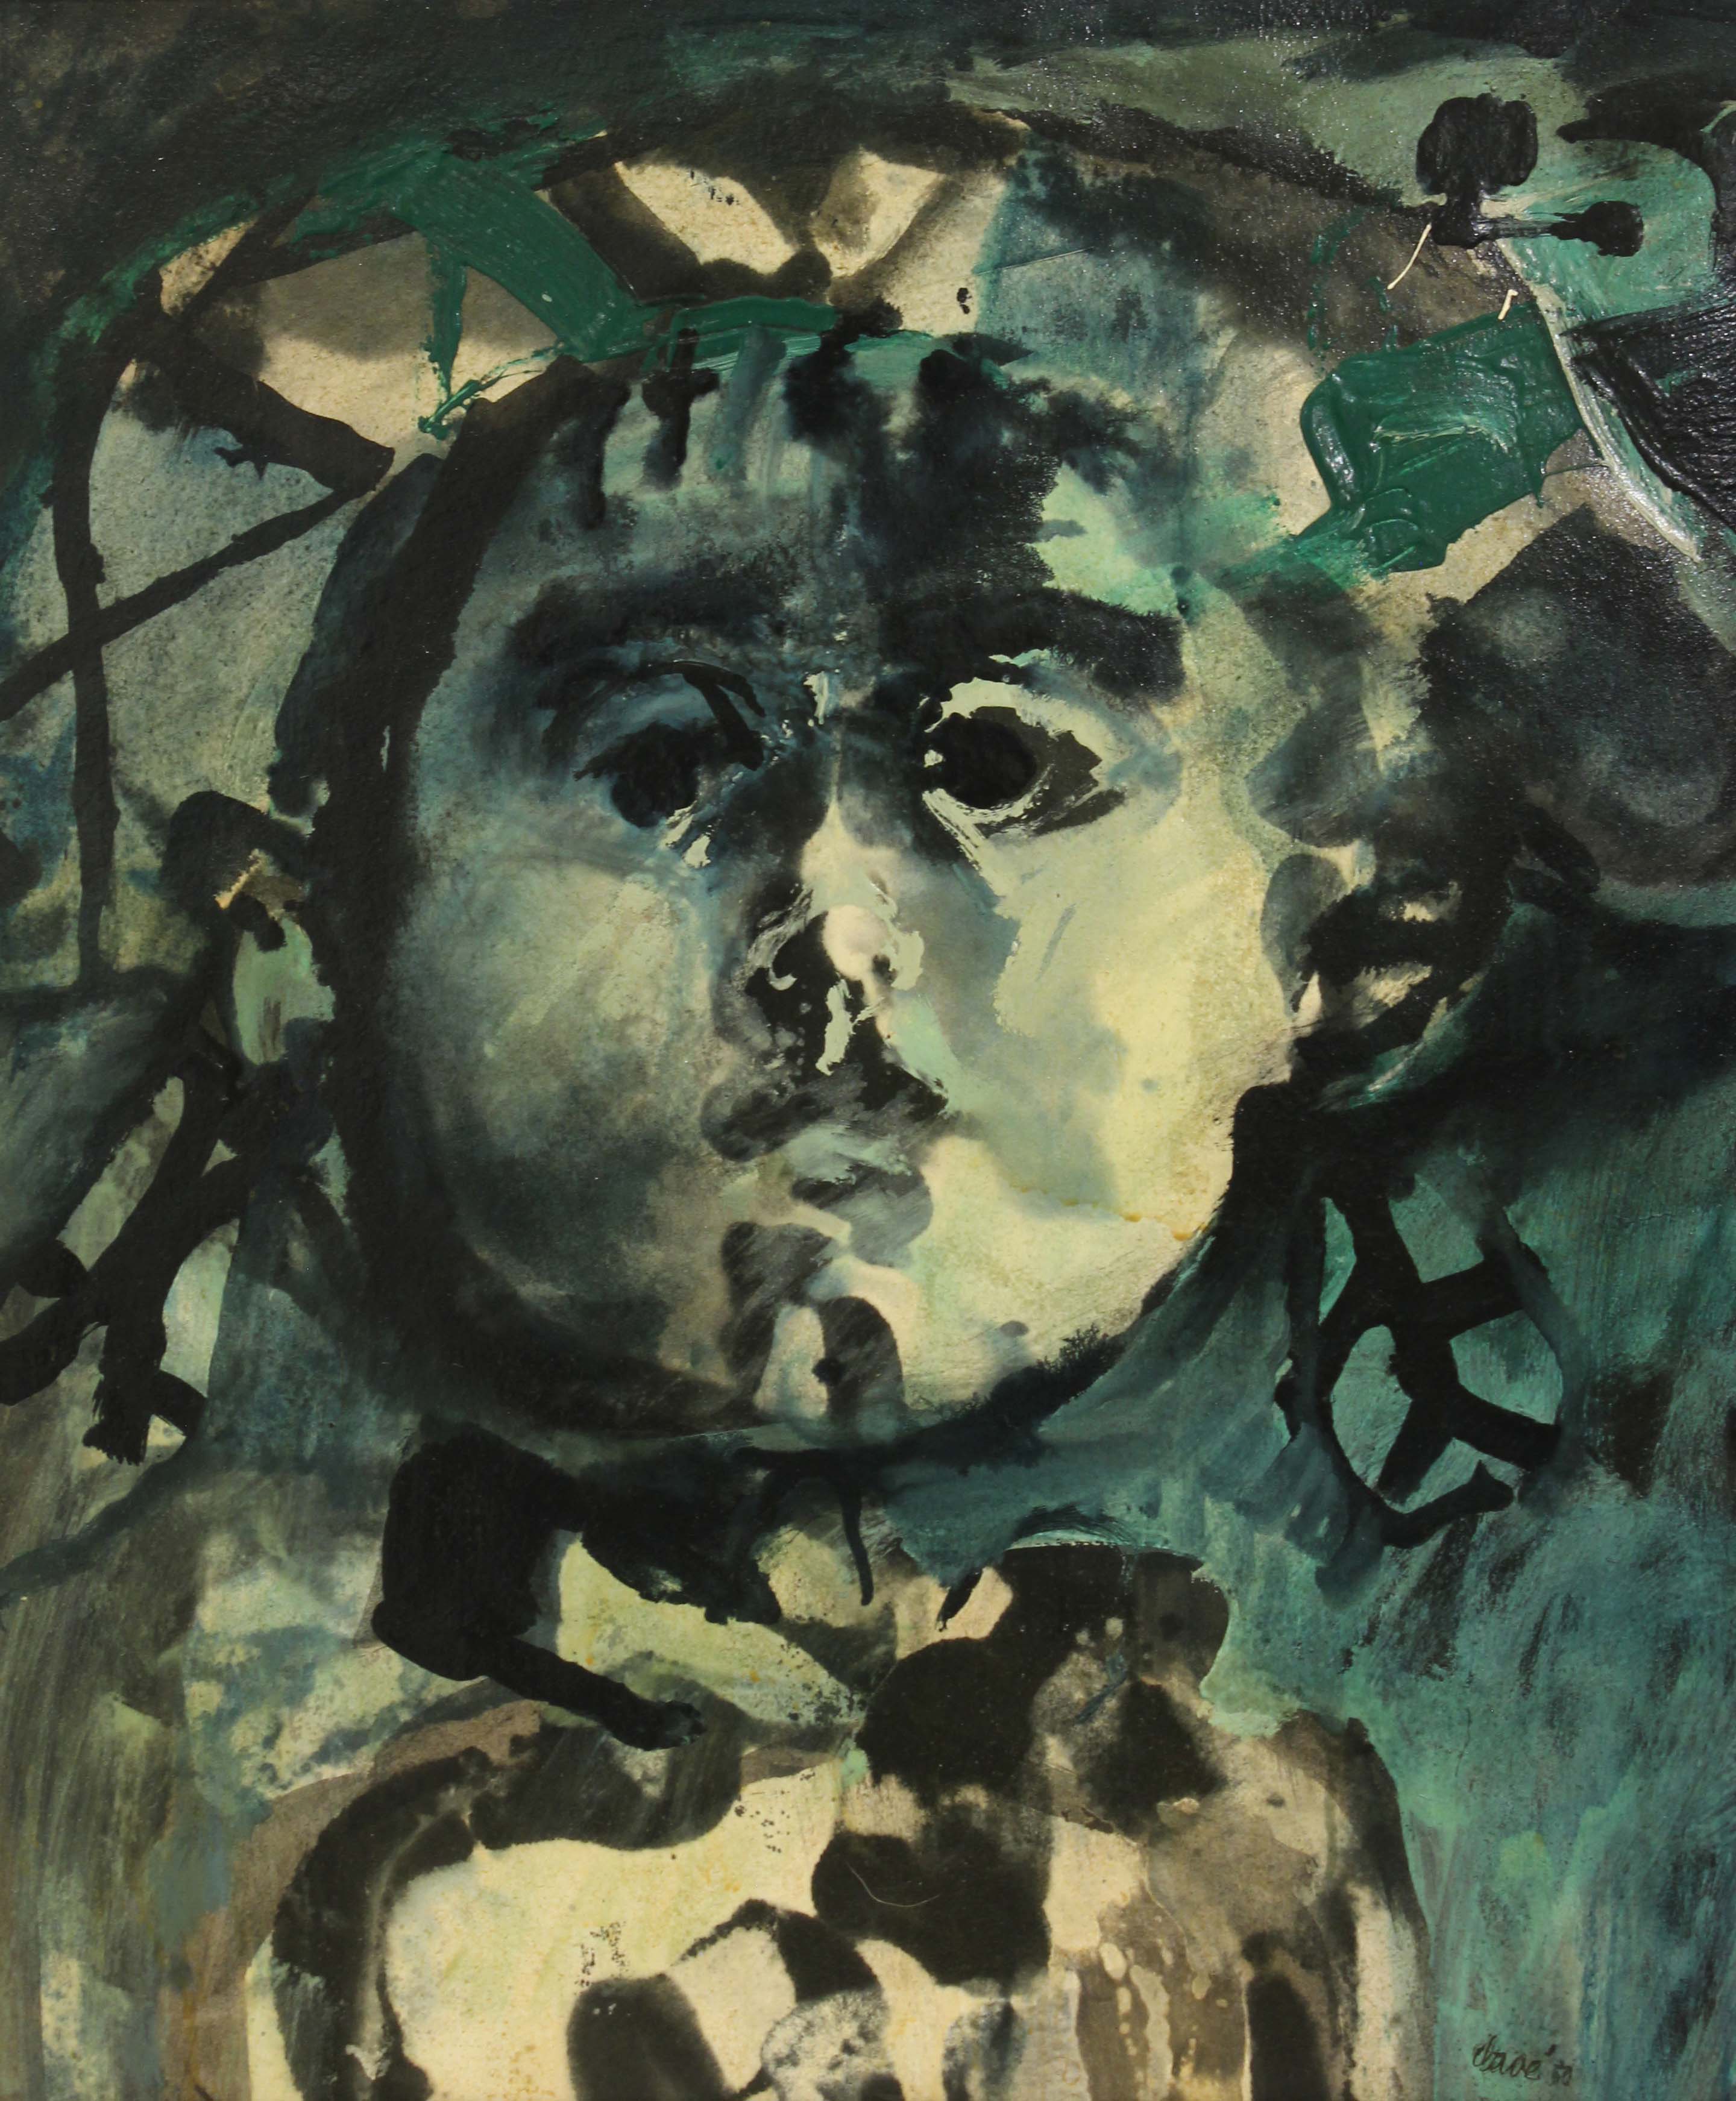 ANTONI CLAVÉ (1913-2005). "PETIT ARLEQUIN", 1950.